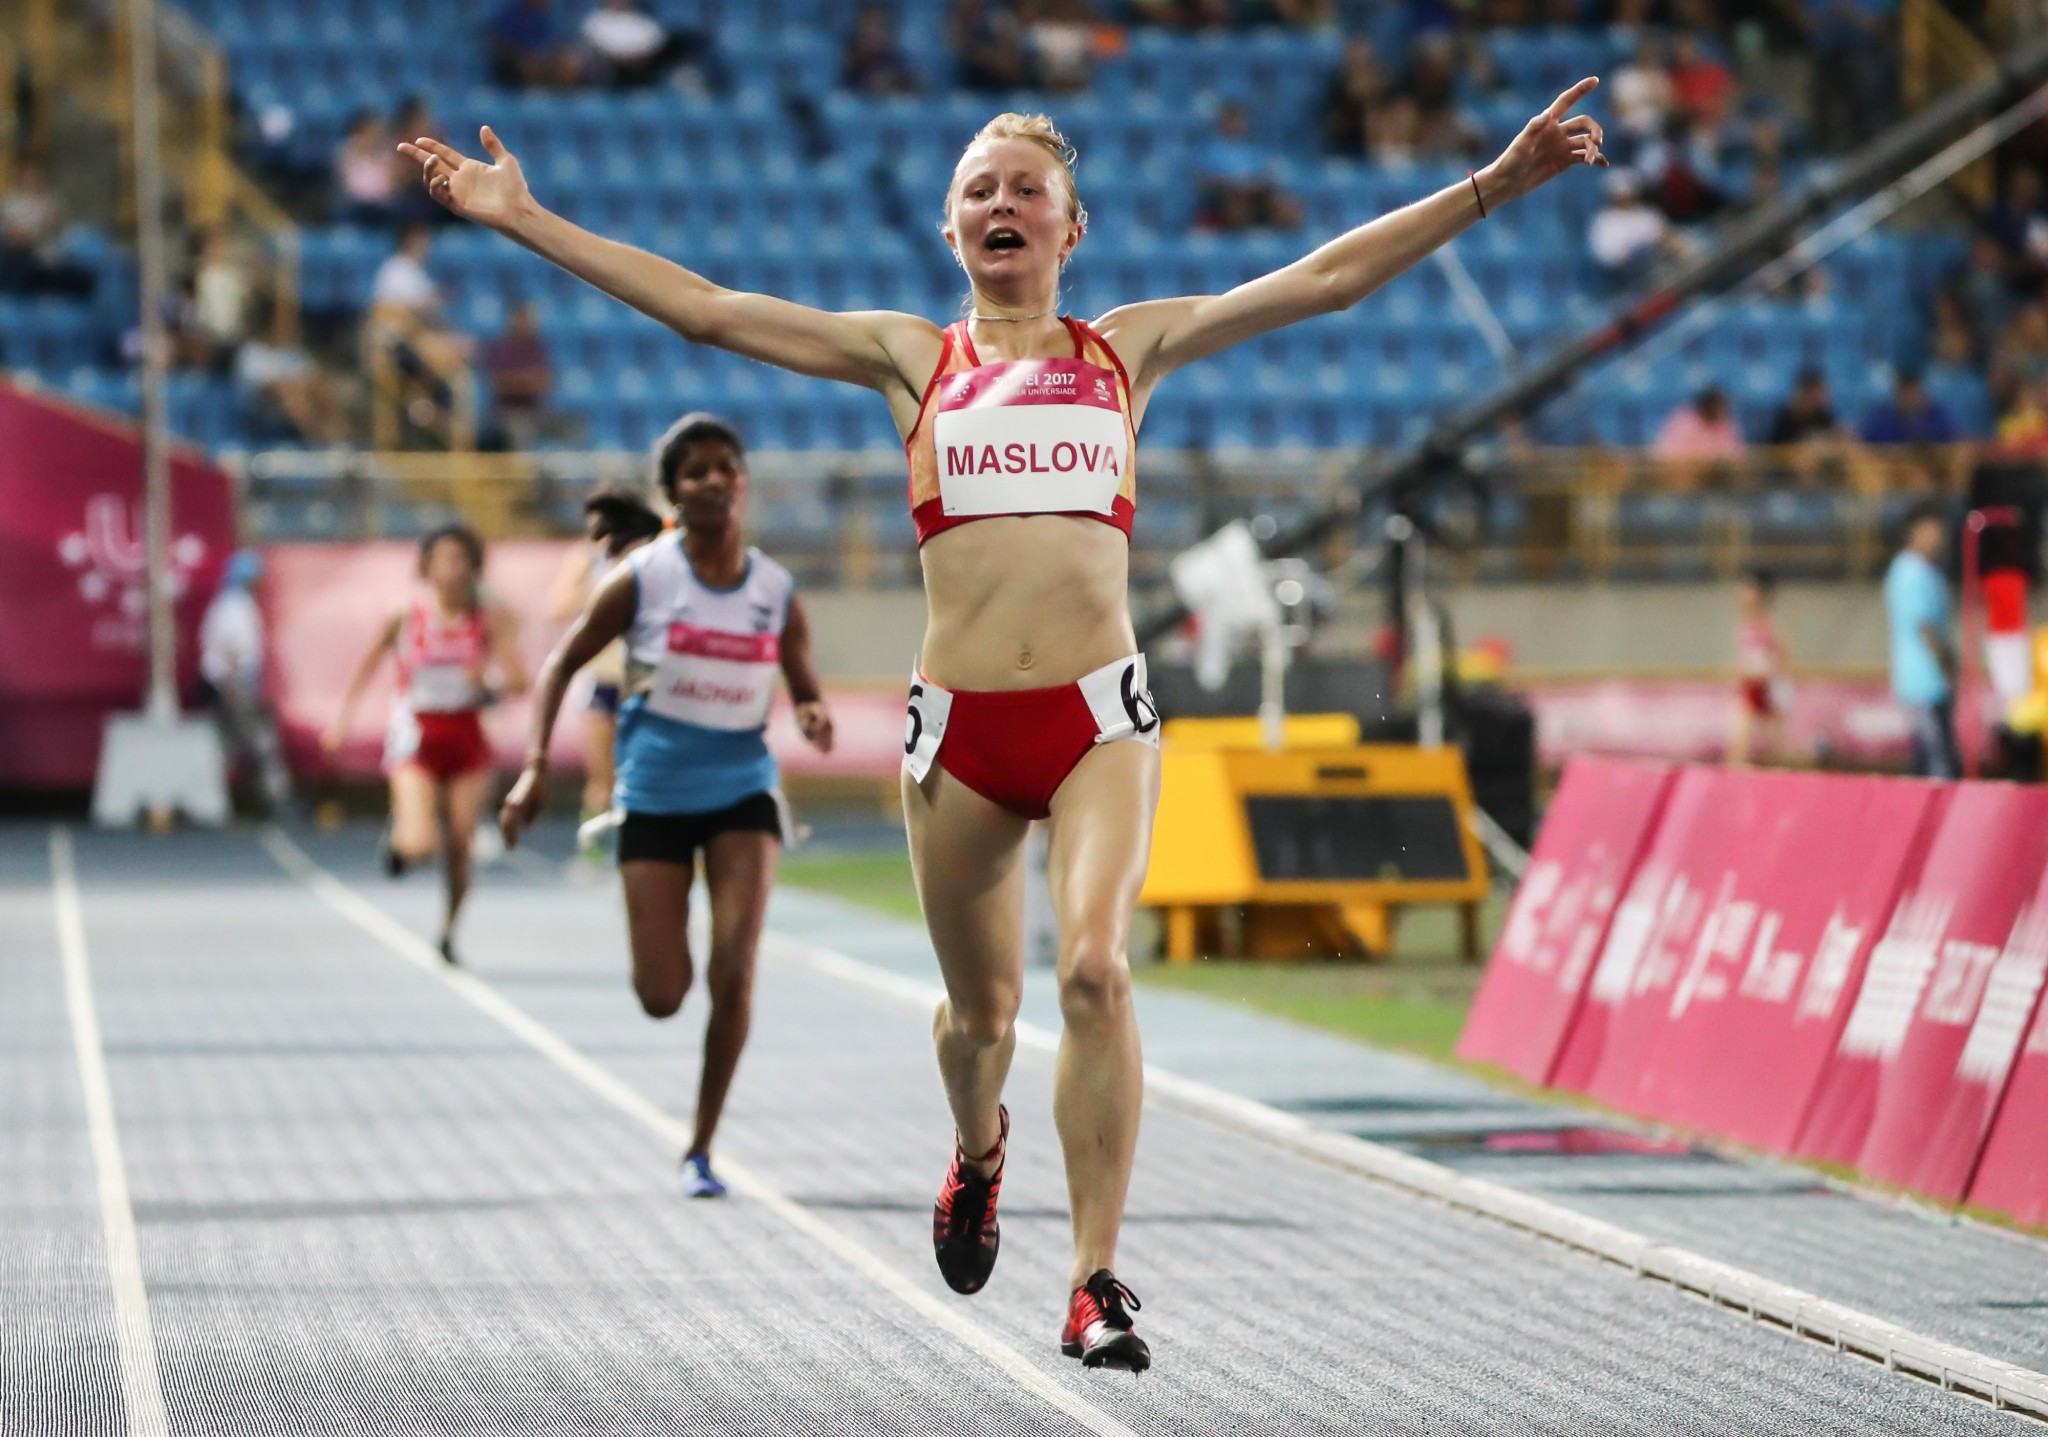 Daria Maslova won the first athletics gold in the women's 10,000m ©Taipei 2017